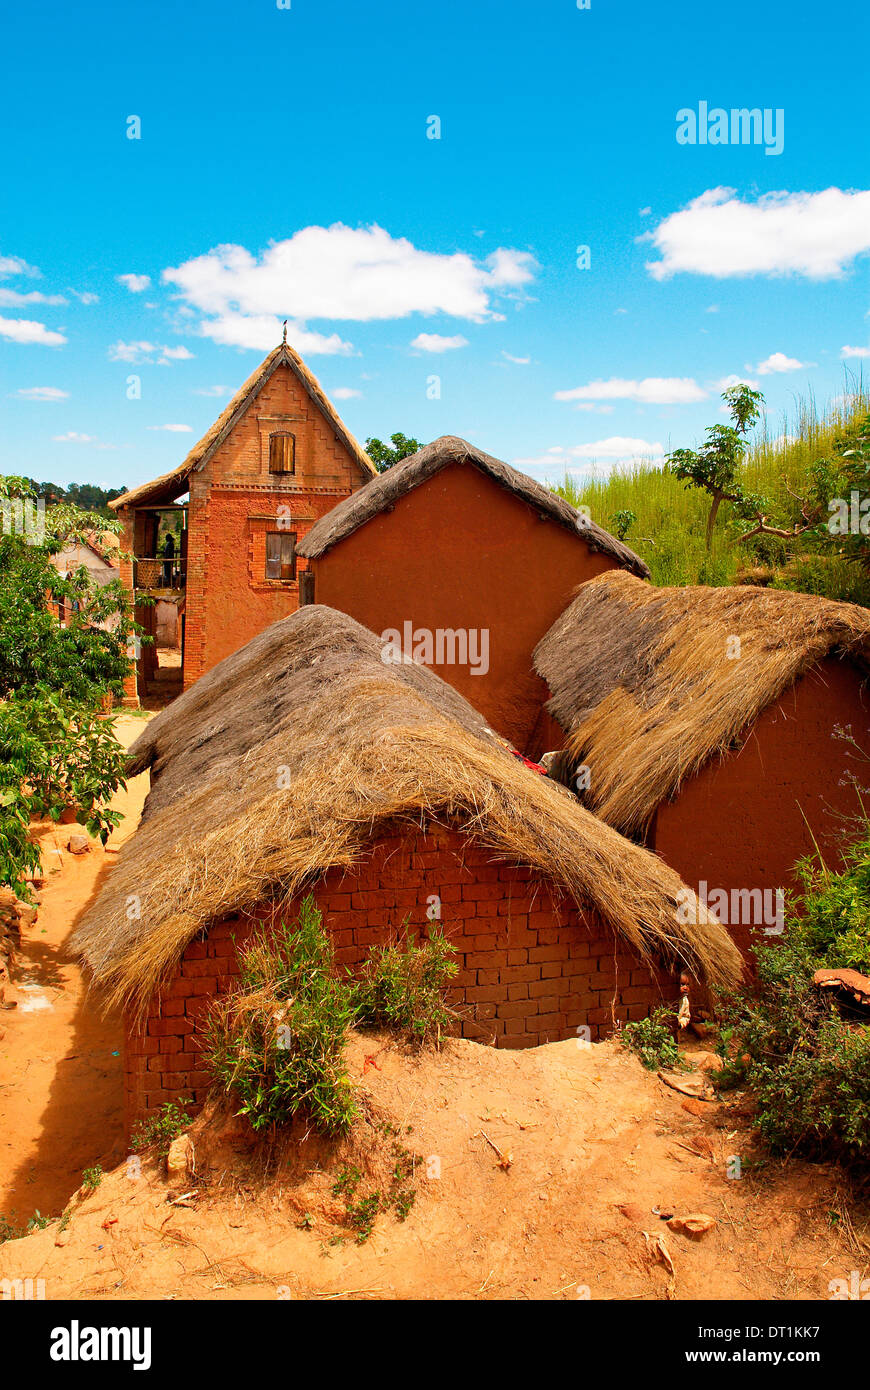 Traditionelle Häuser auf Hügel rund um Antananarivo, Madagaskar, Afrika Stockfoto